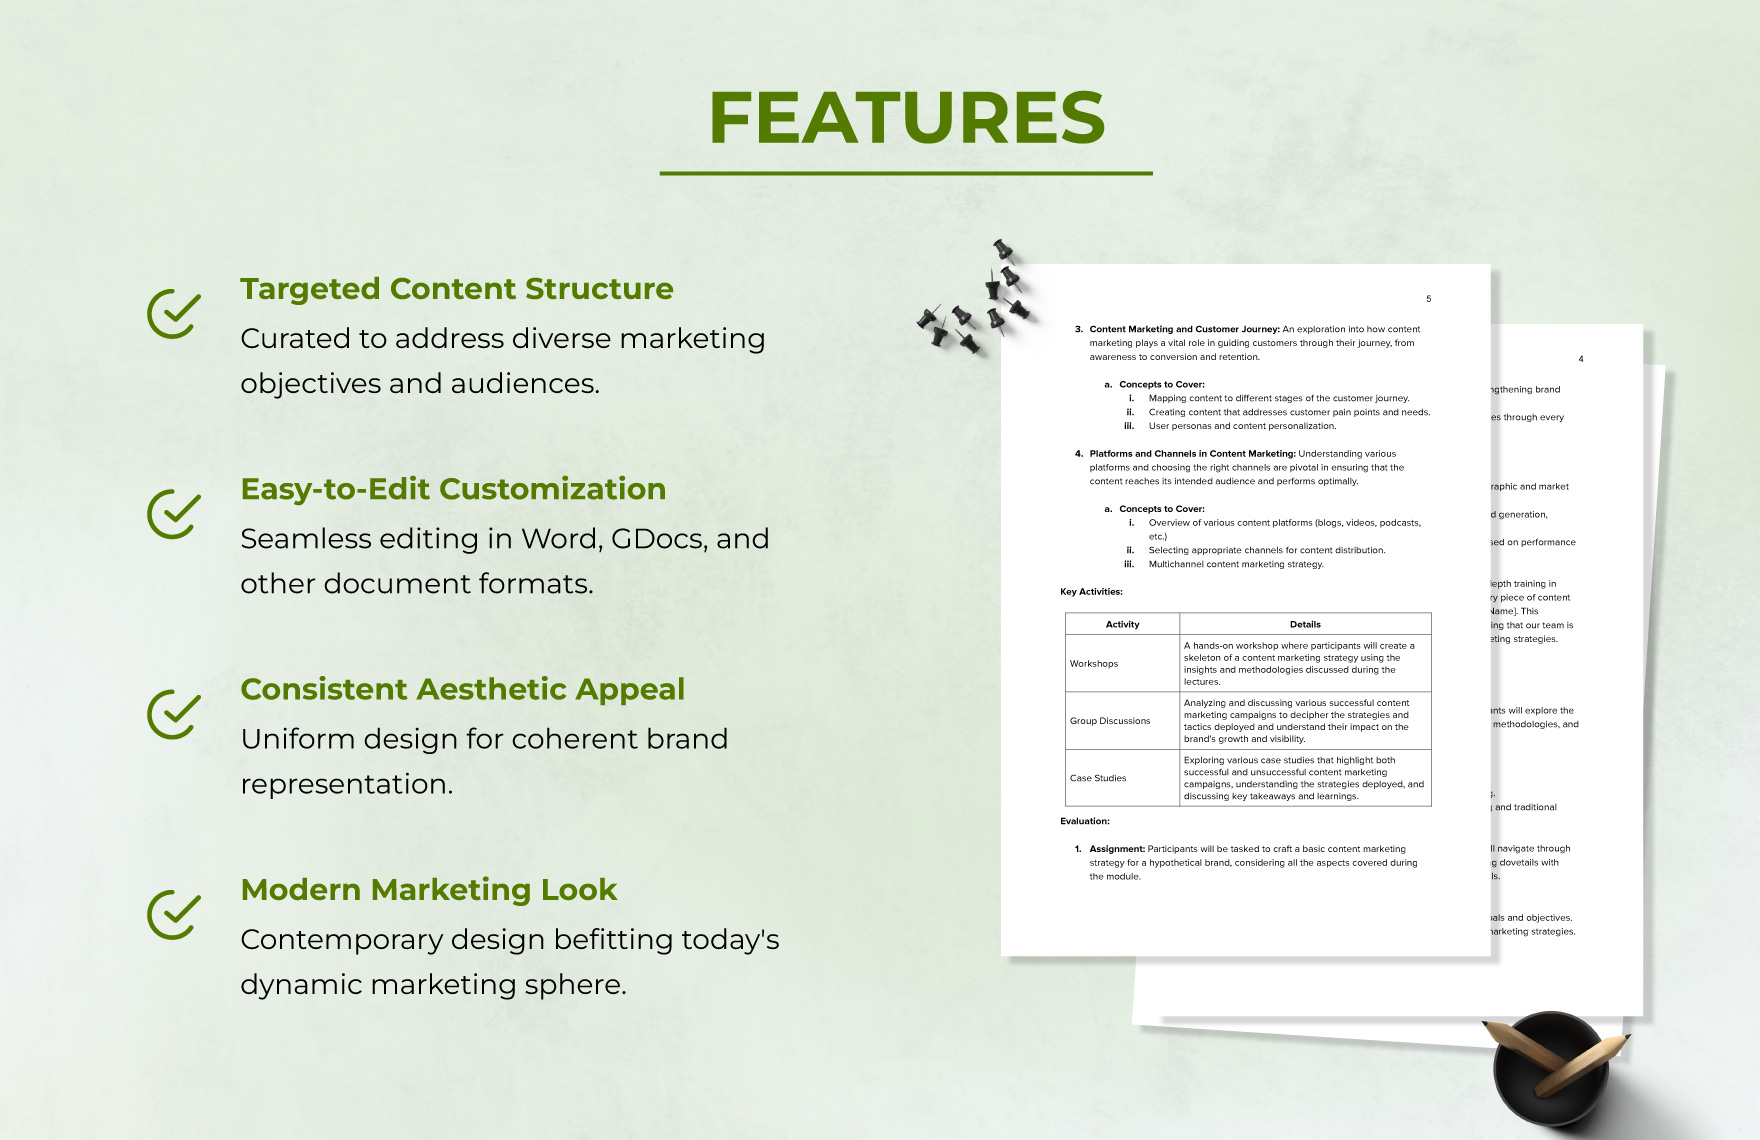 Content Marketing Curriculum Template